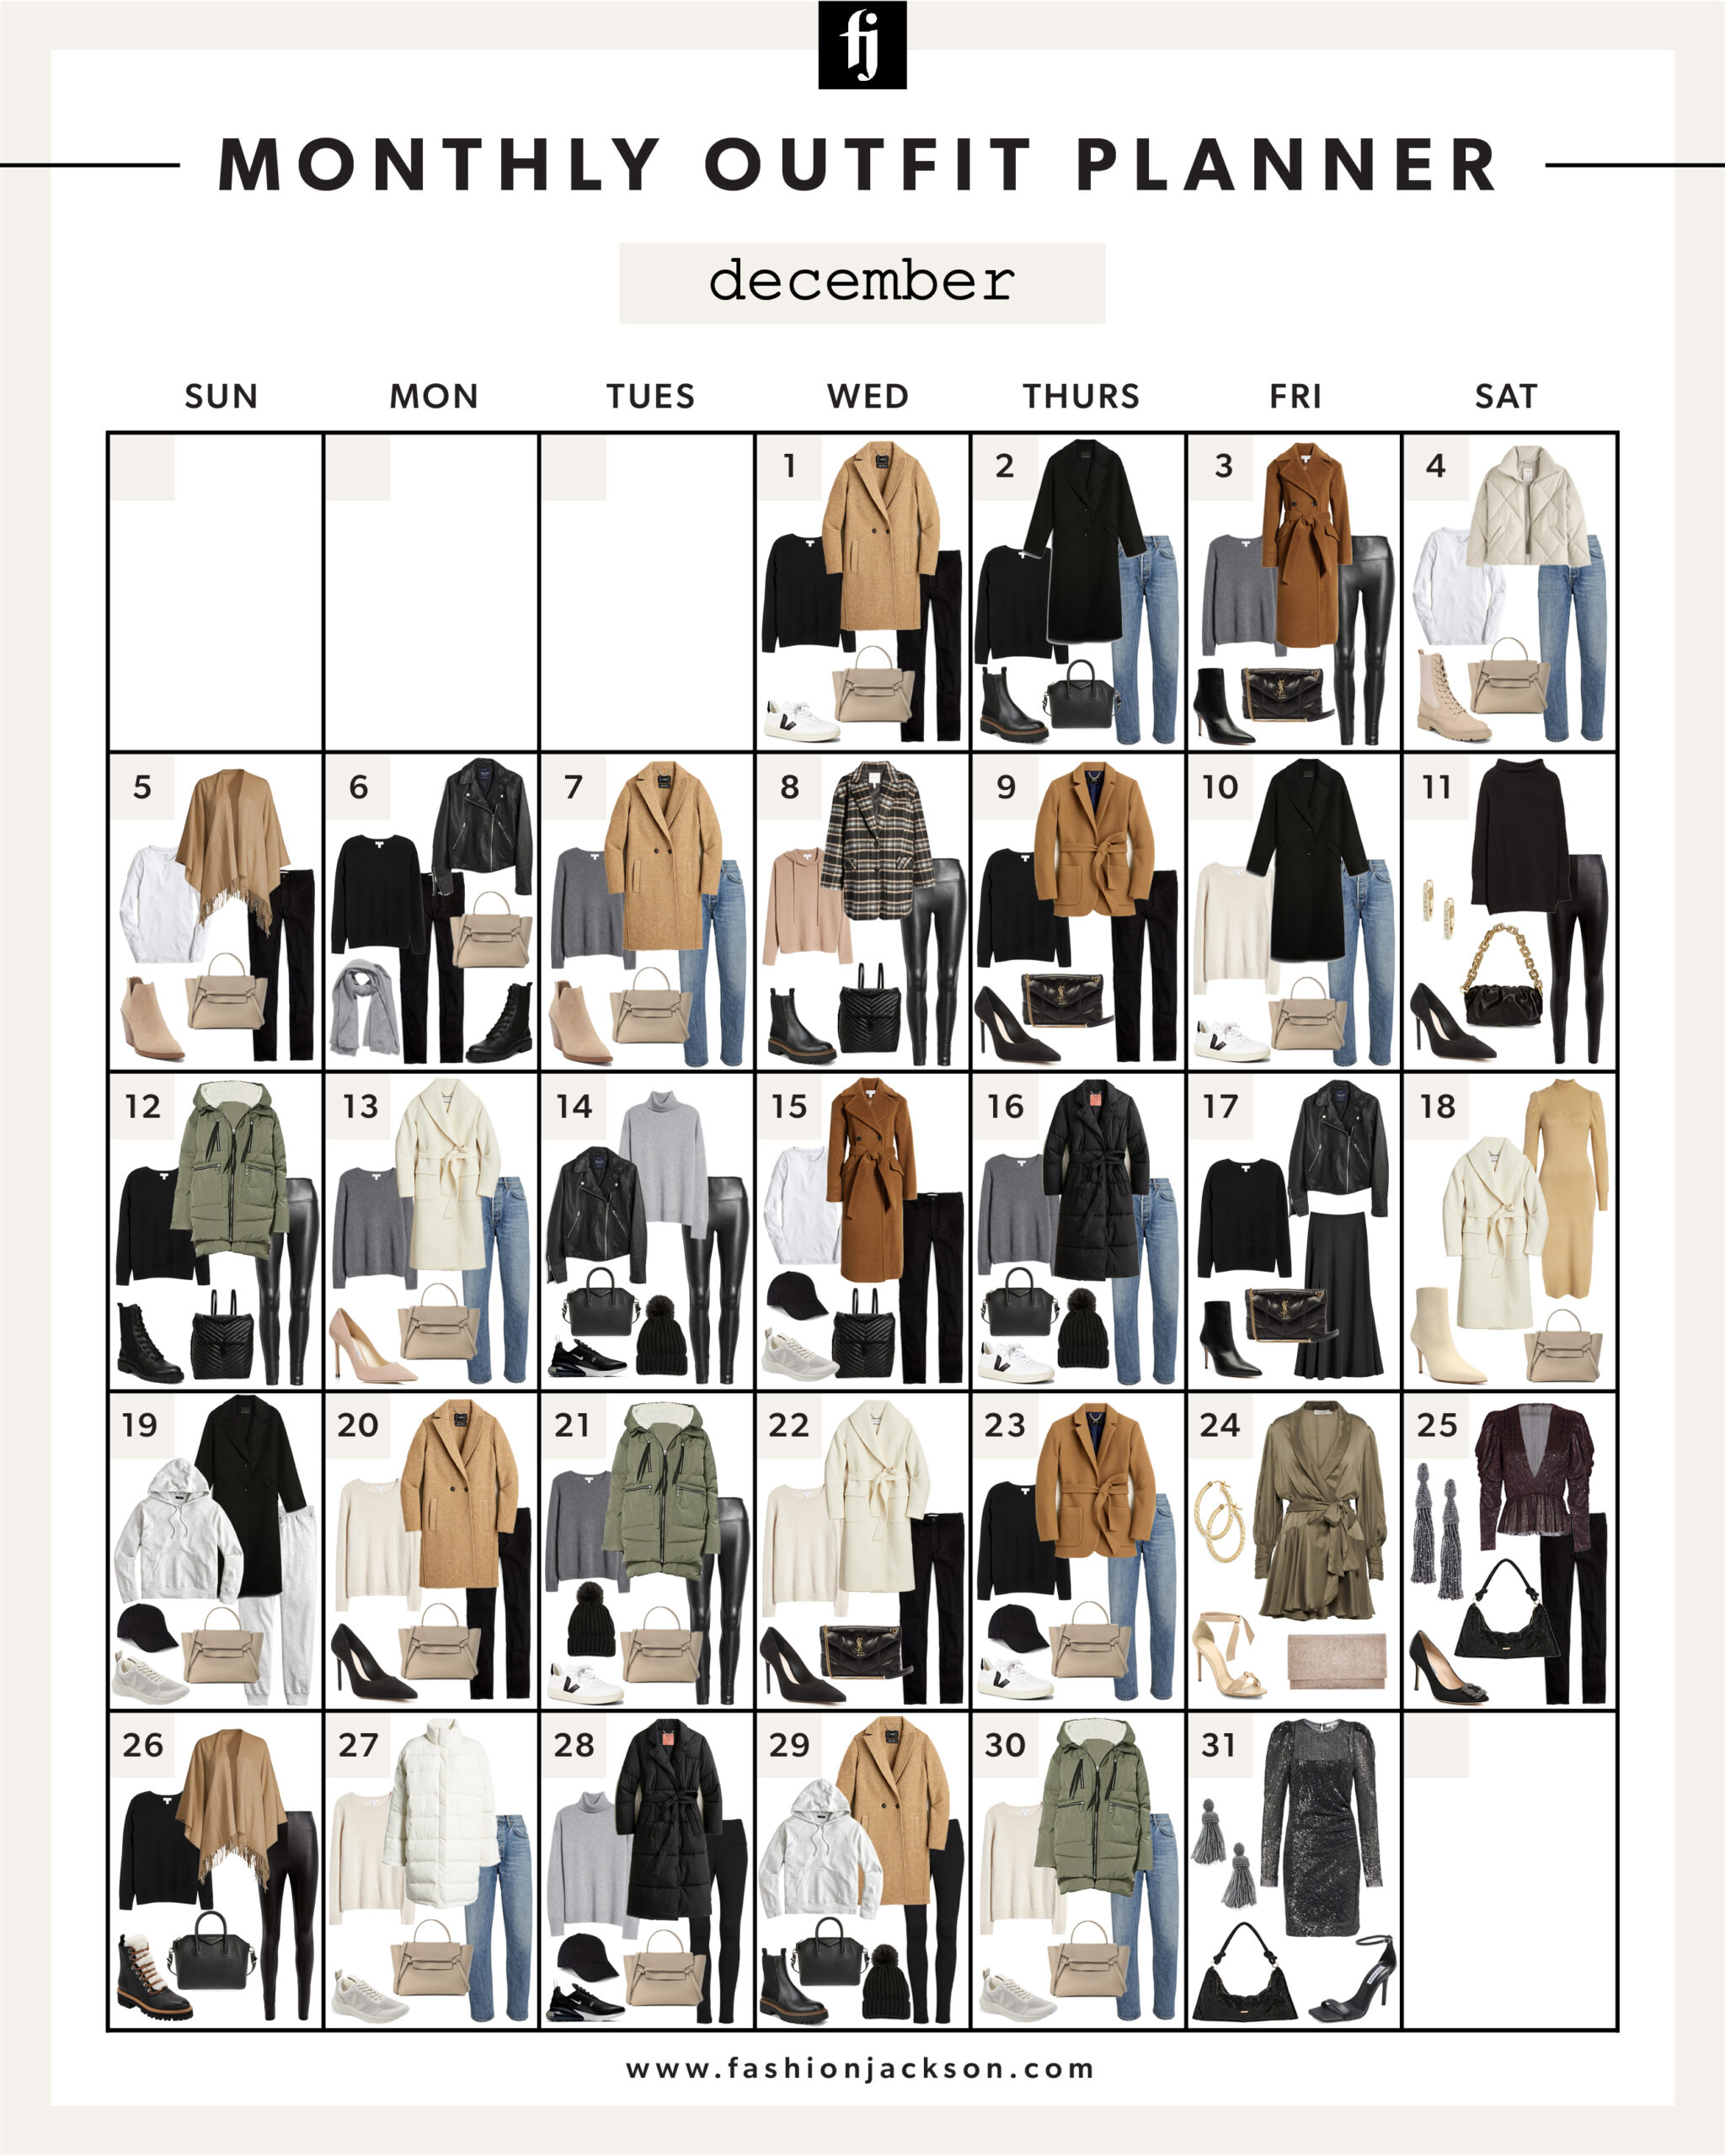 December Outfit Ideas 2020 - StyledJen